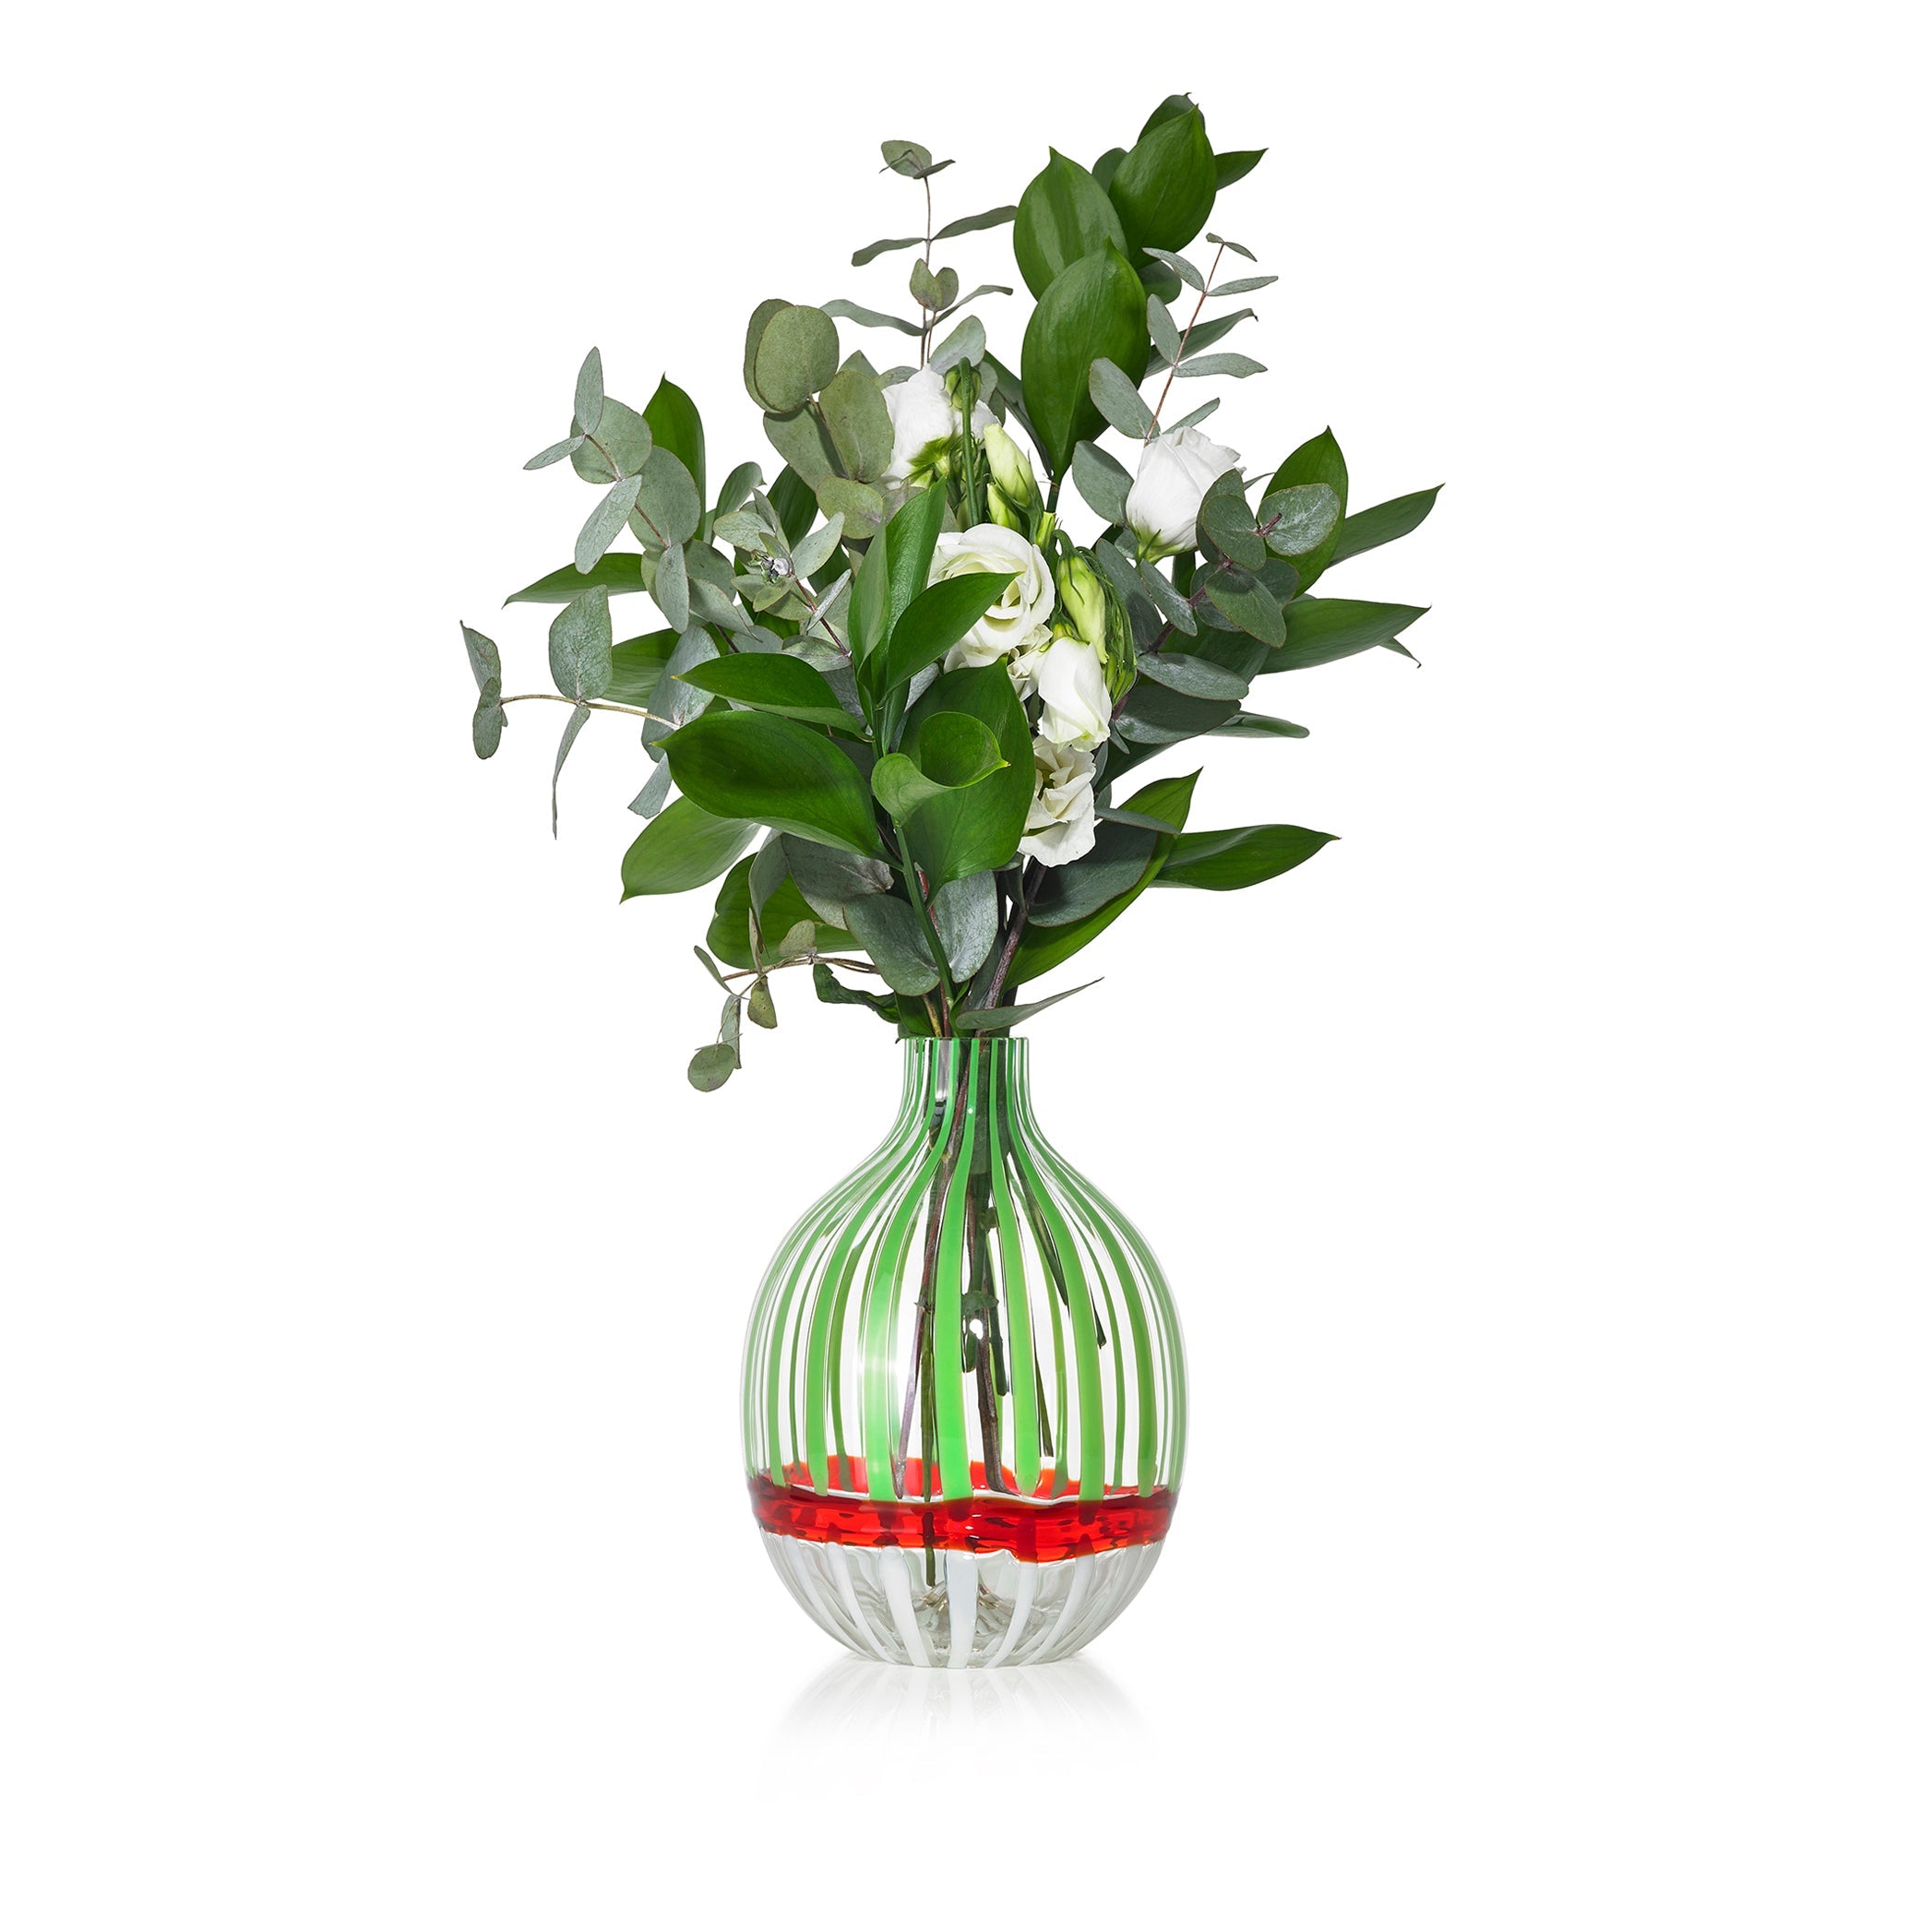 Handblown Double Stripe Glass Vase in Avocado Green, Red & White, 18cm